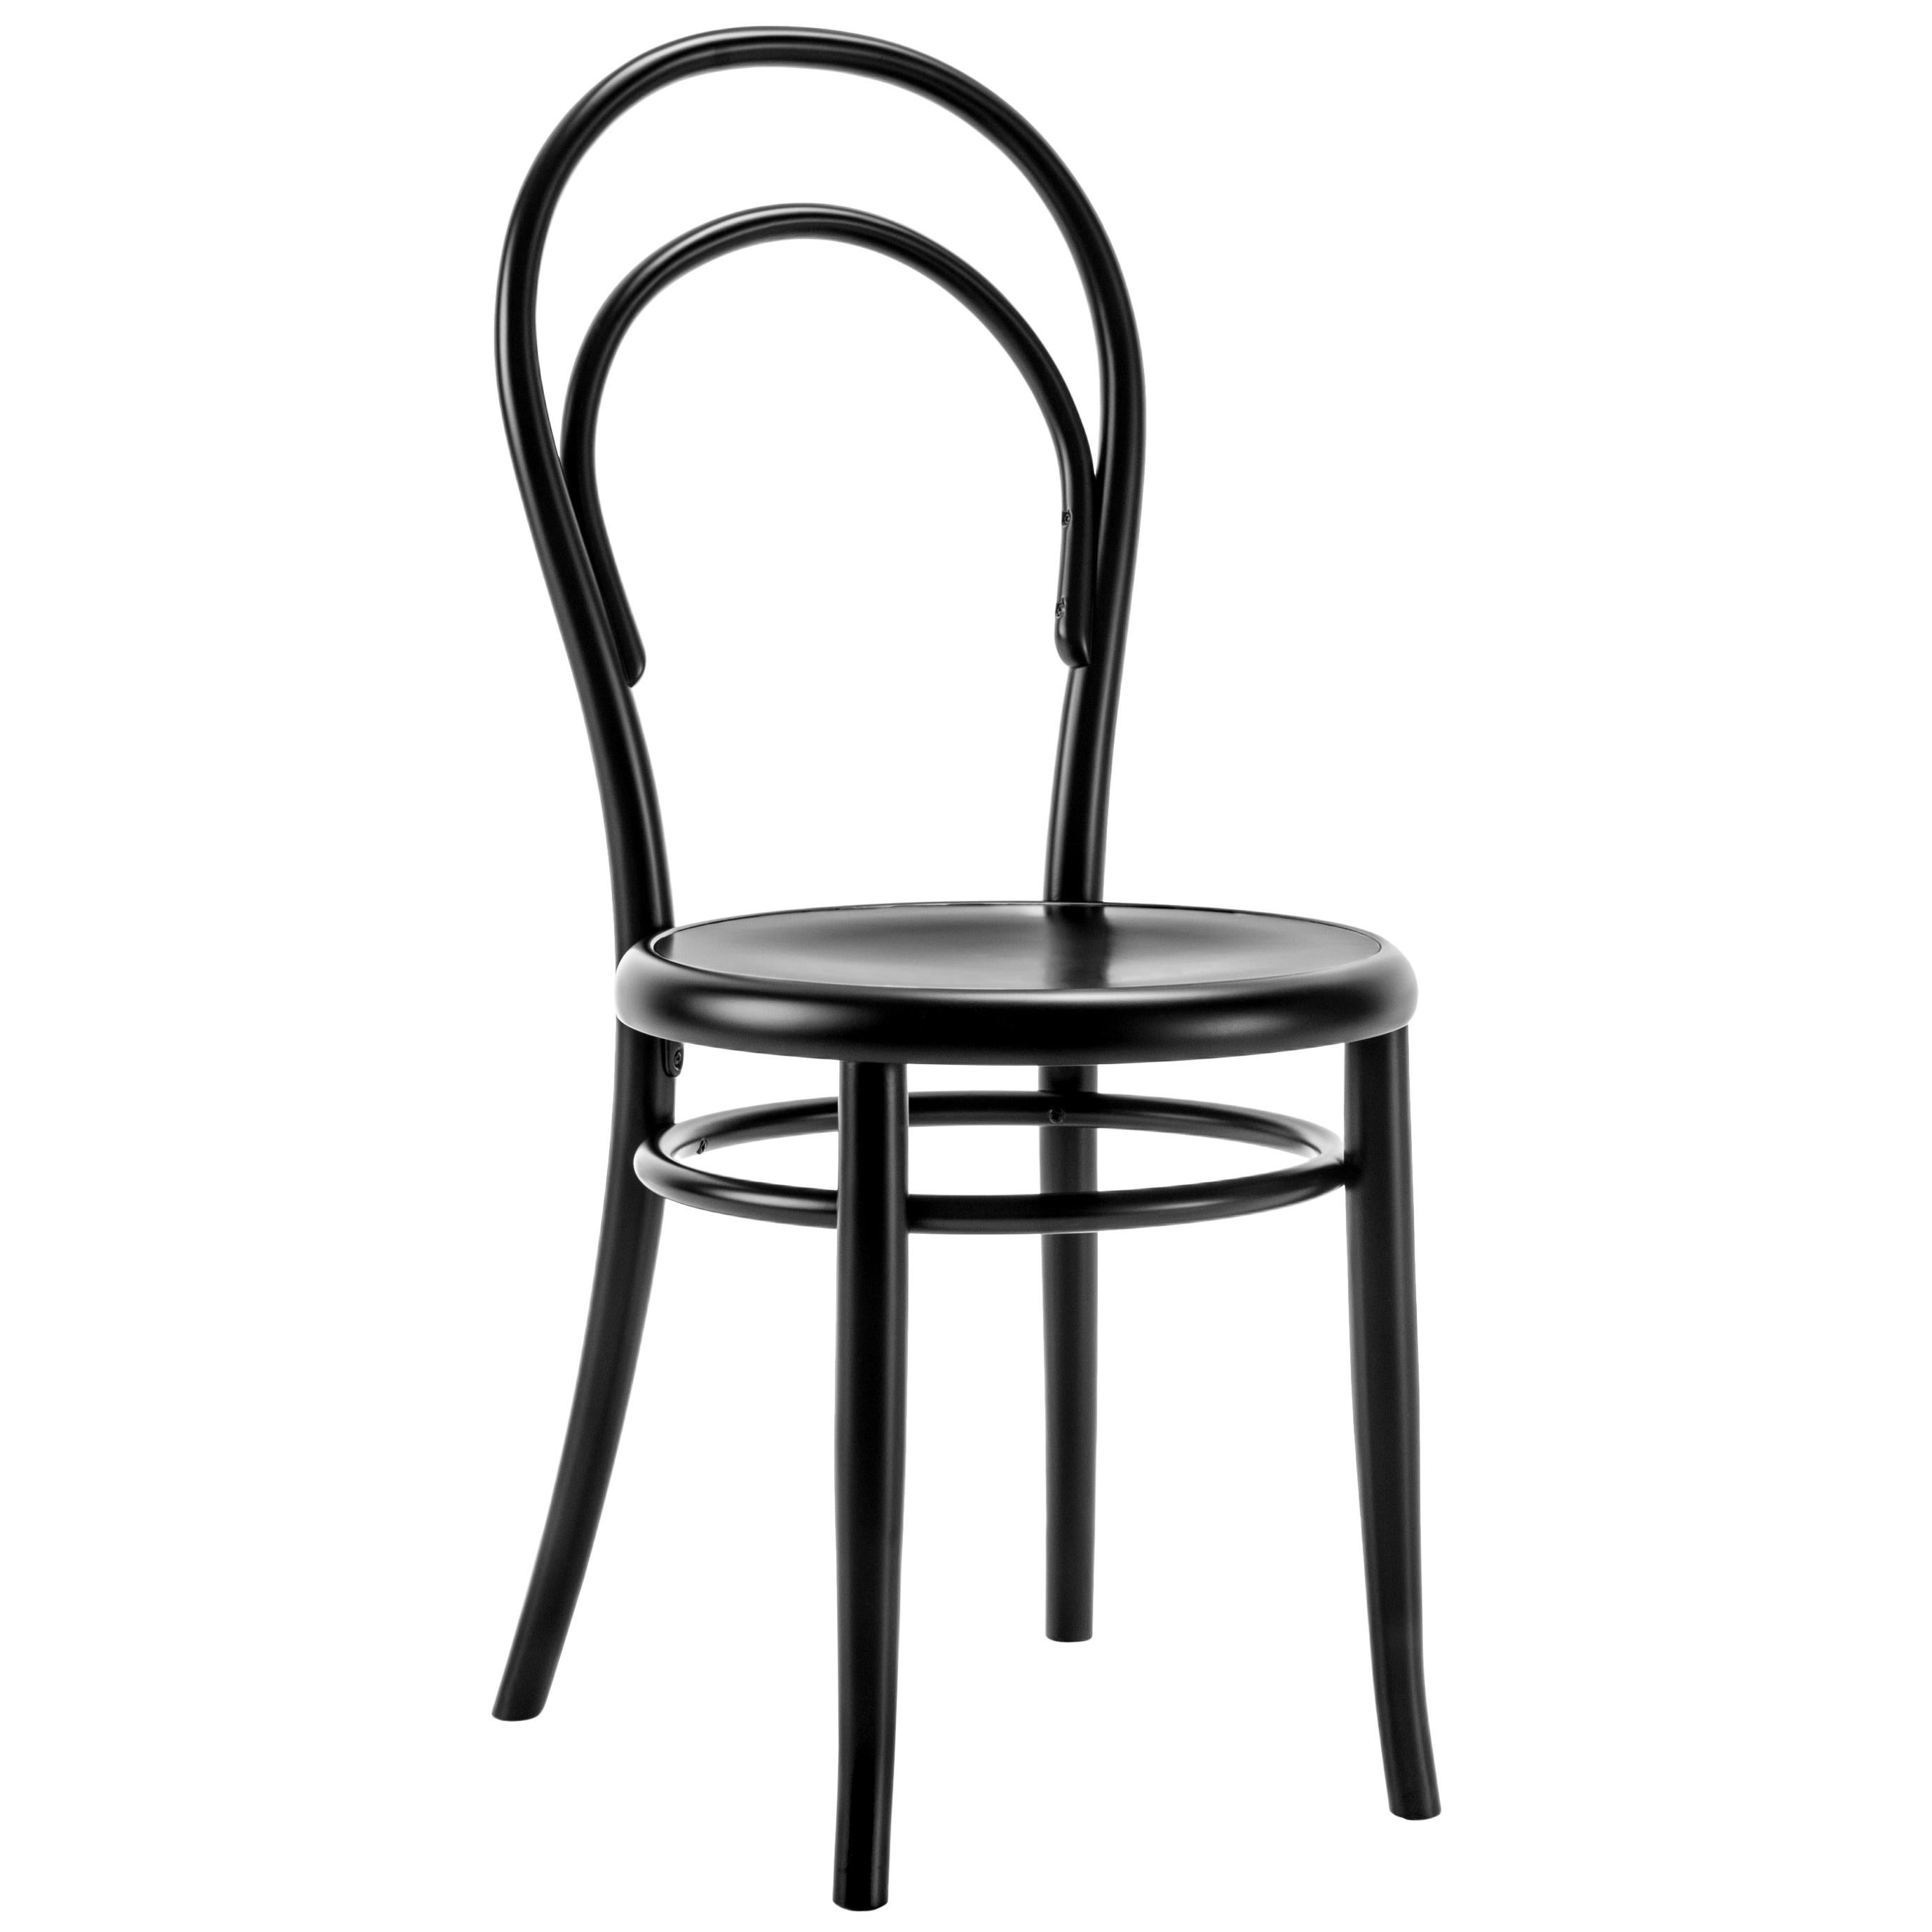 Gebrüder Thonet Vienna GmbH N.14 Chair in Black with Plywood Seat